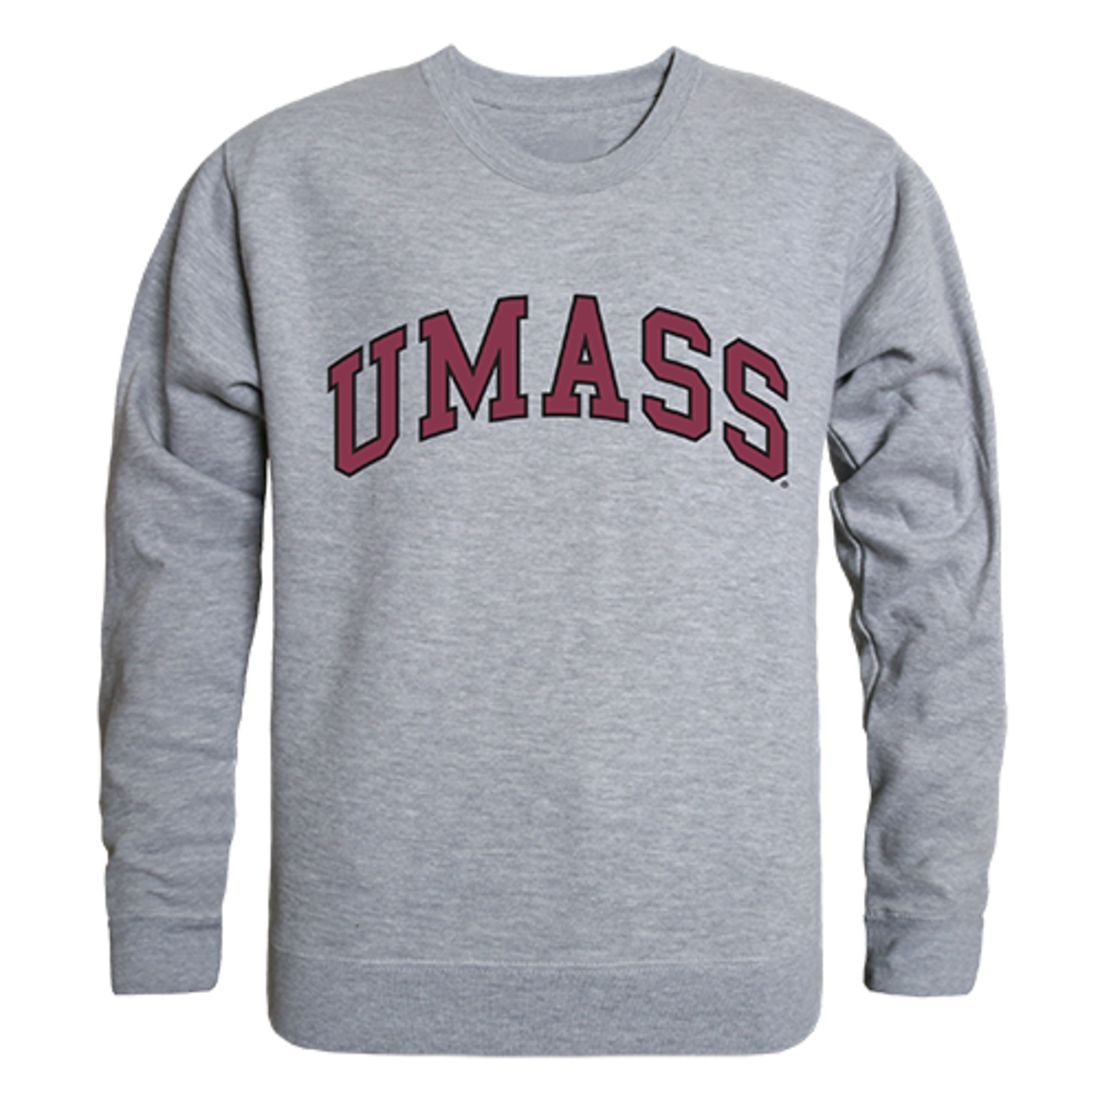 UMASS University of Massachusetts Amherst Campus Crewneck Pullover Sweatshirt Sweater Heather Grey-Campus-Wardrobe